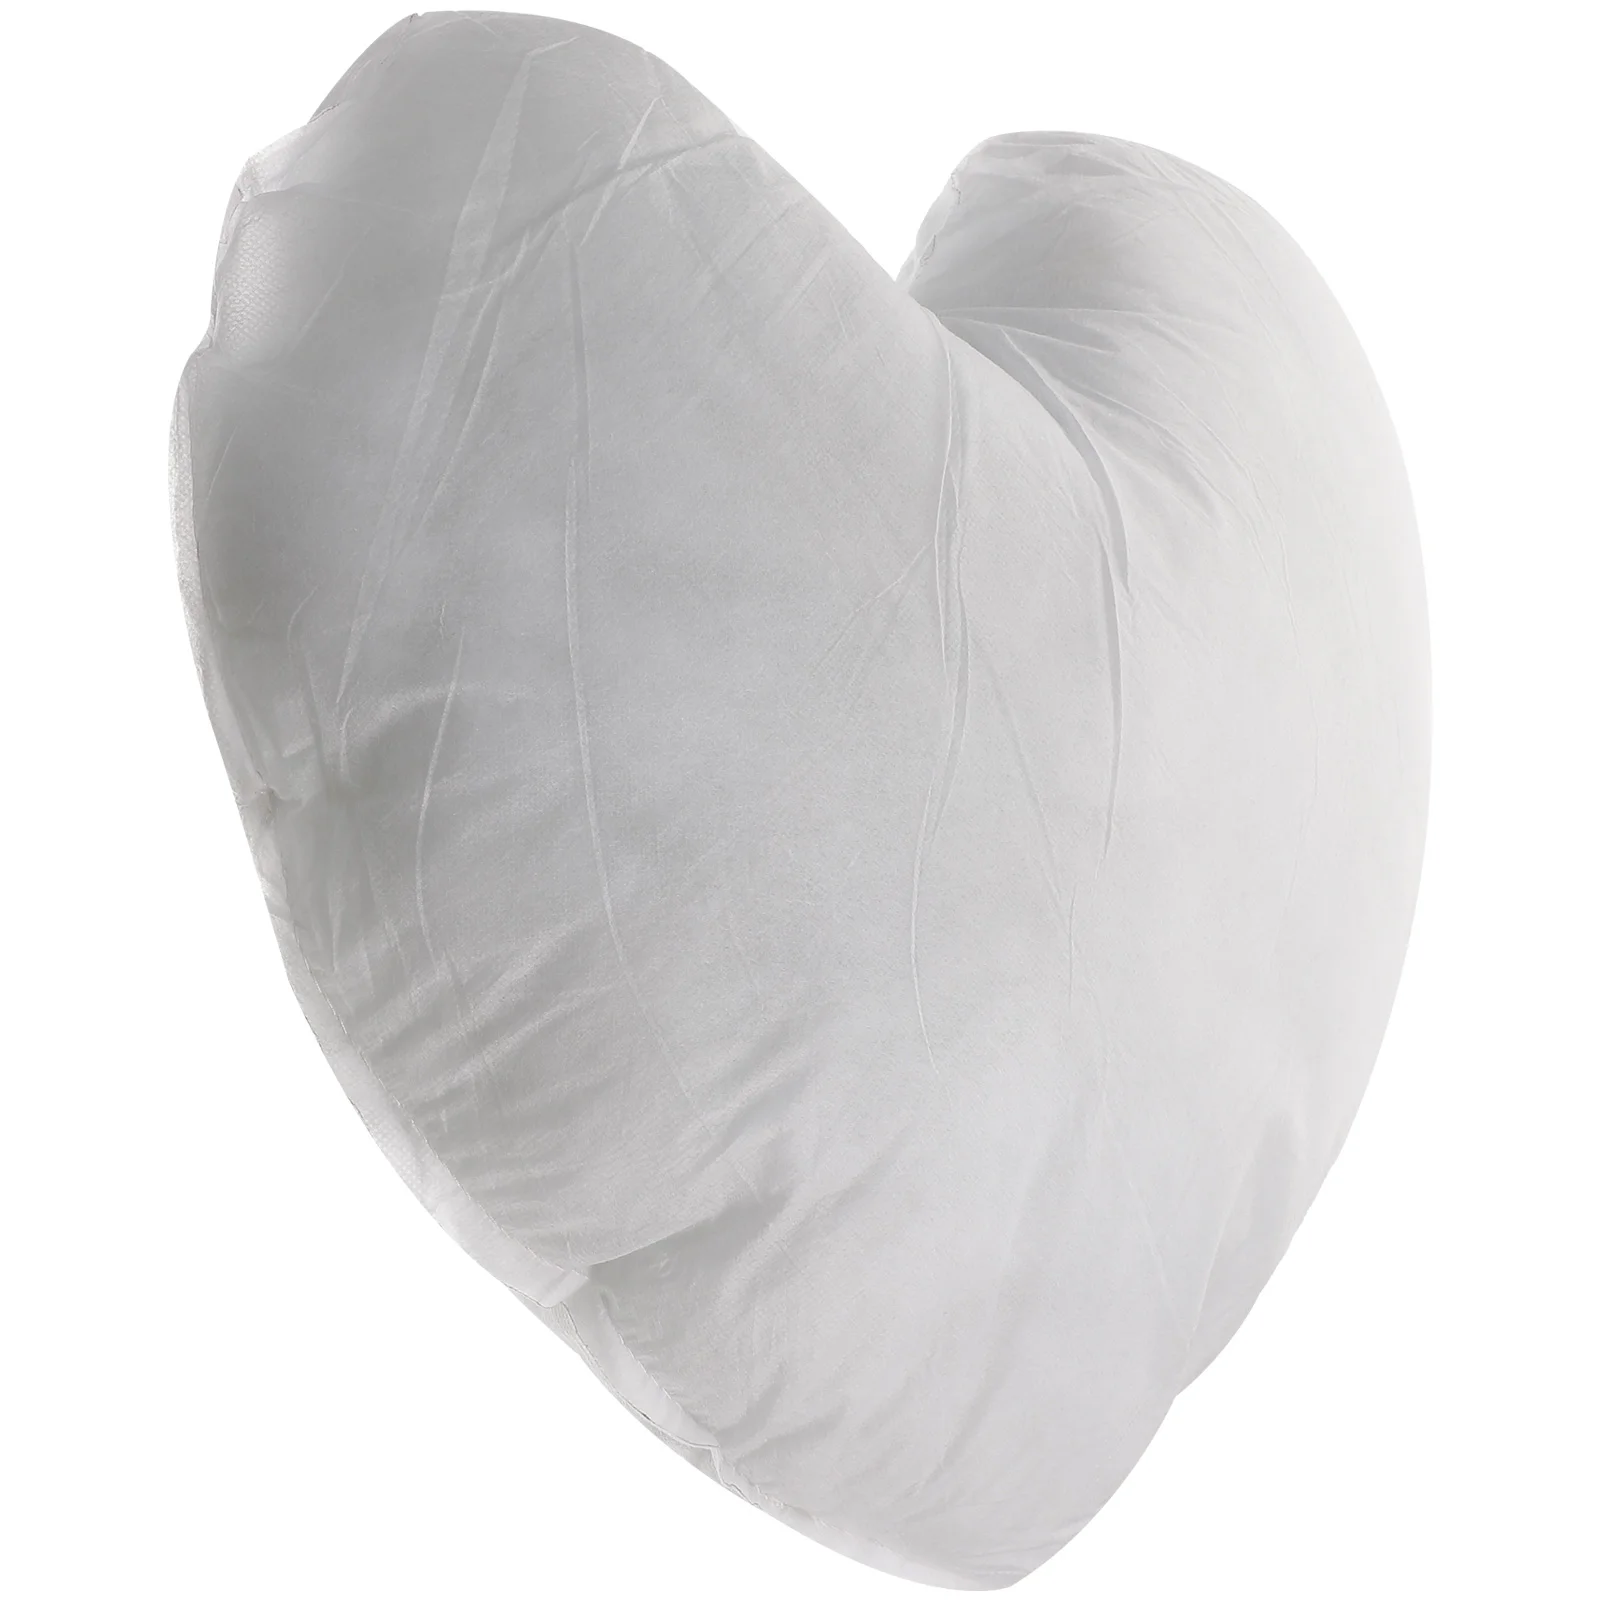 

Peach Heart Pillow Home Pillowcase Stuffe Decor Cushion Core Sofa Stuffer Couch Filler Pp Cotton Inserts Circle